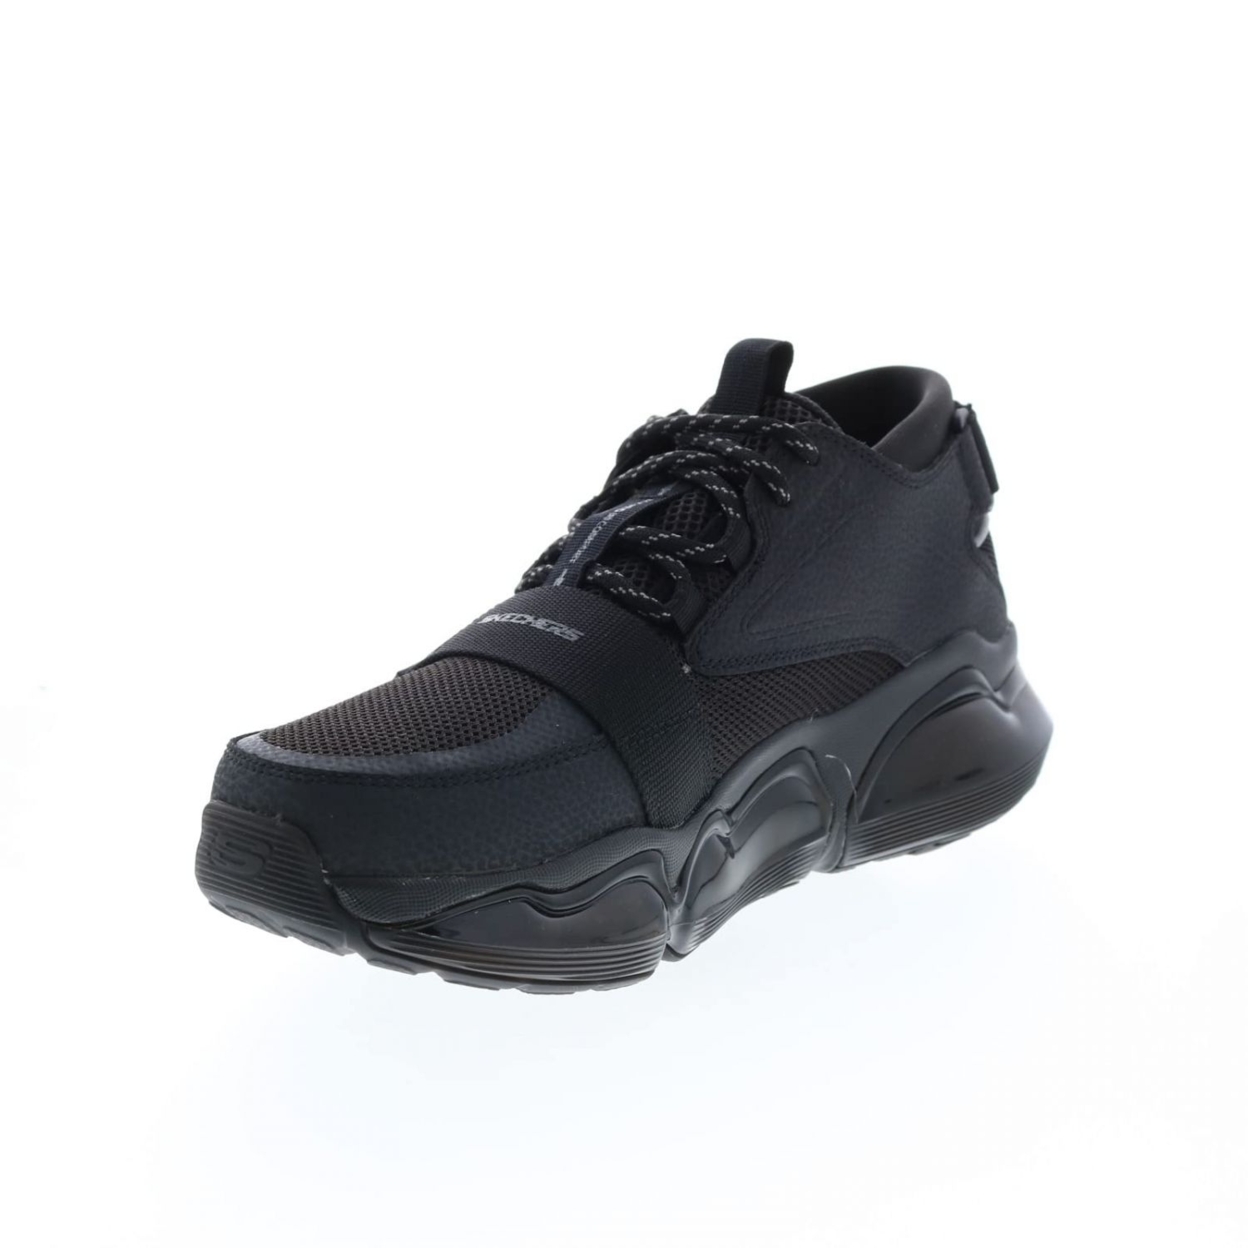 Skechers Mens Air Cushioning Mega Lifestyle Sneakers Shoes BLACK - BLACK, 10